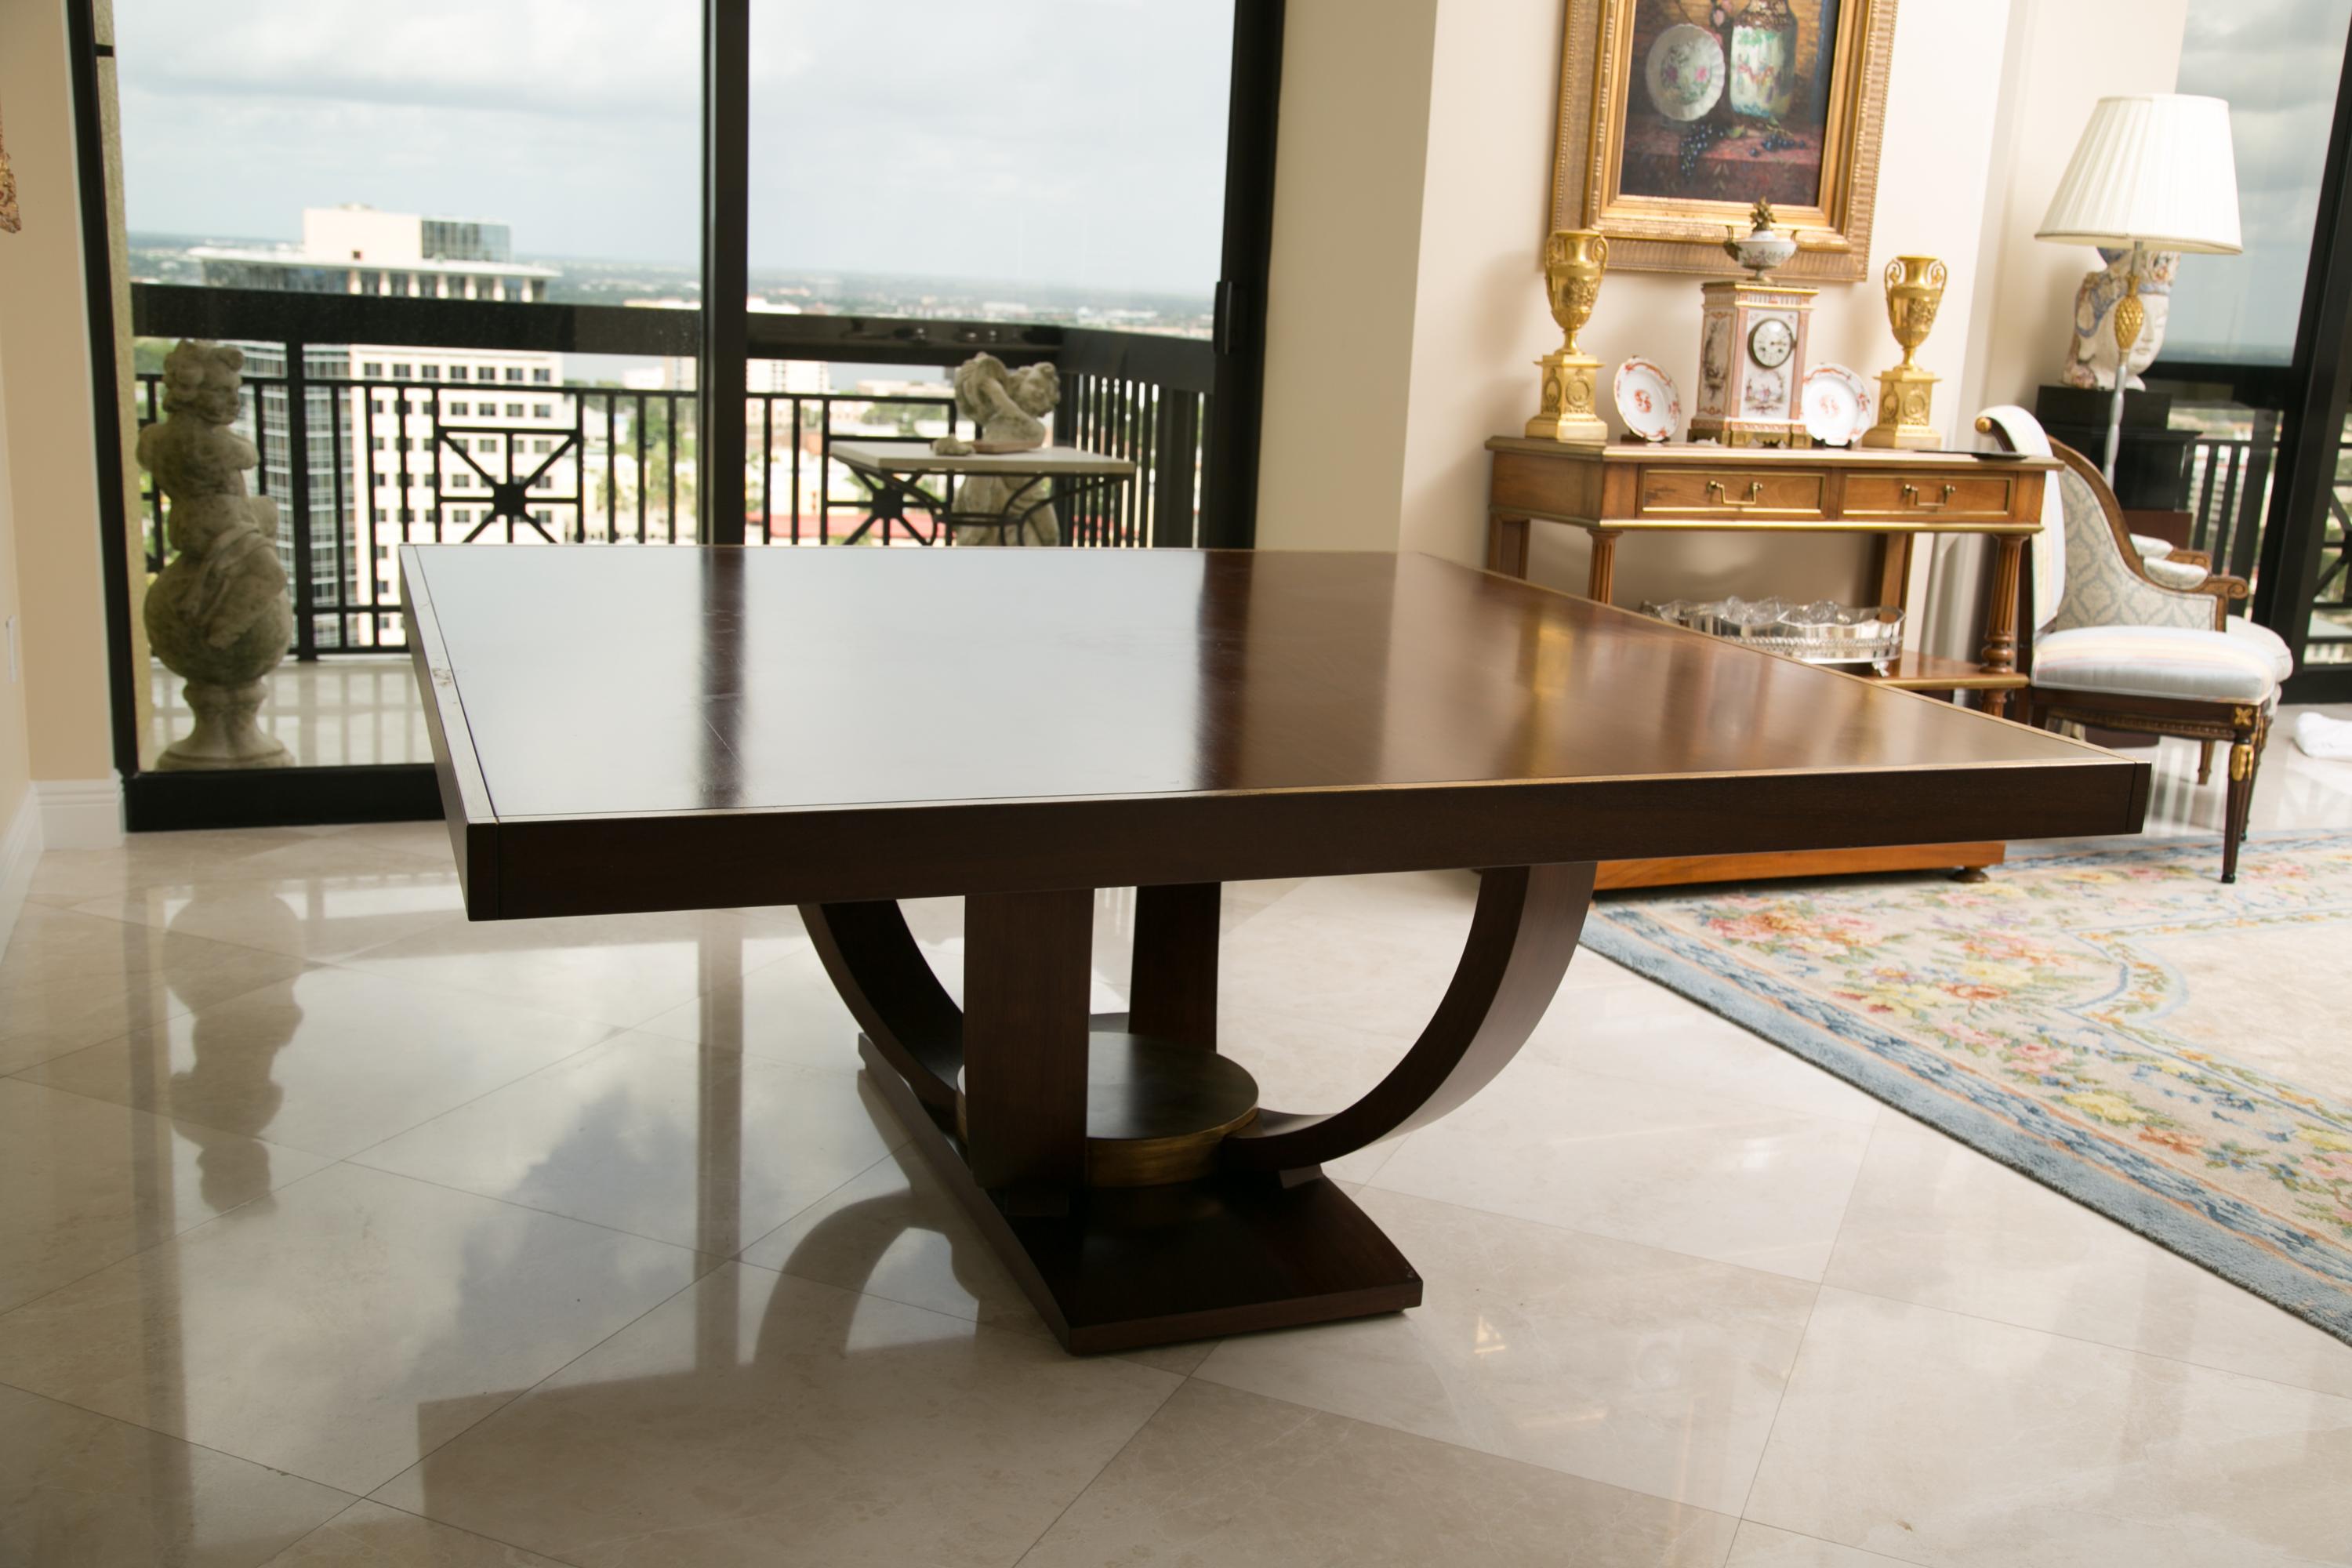 century omni dining table